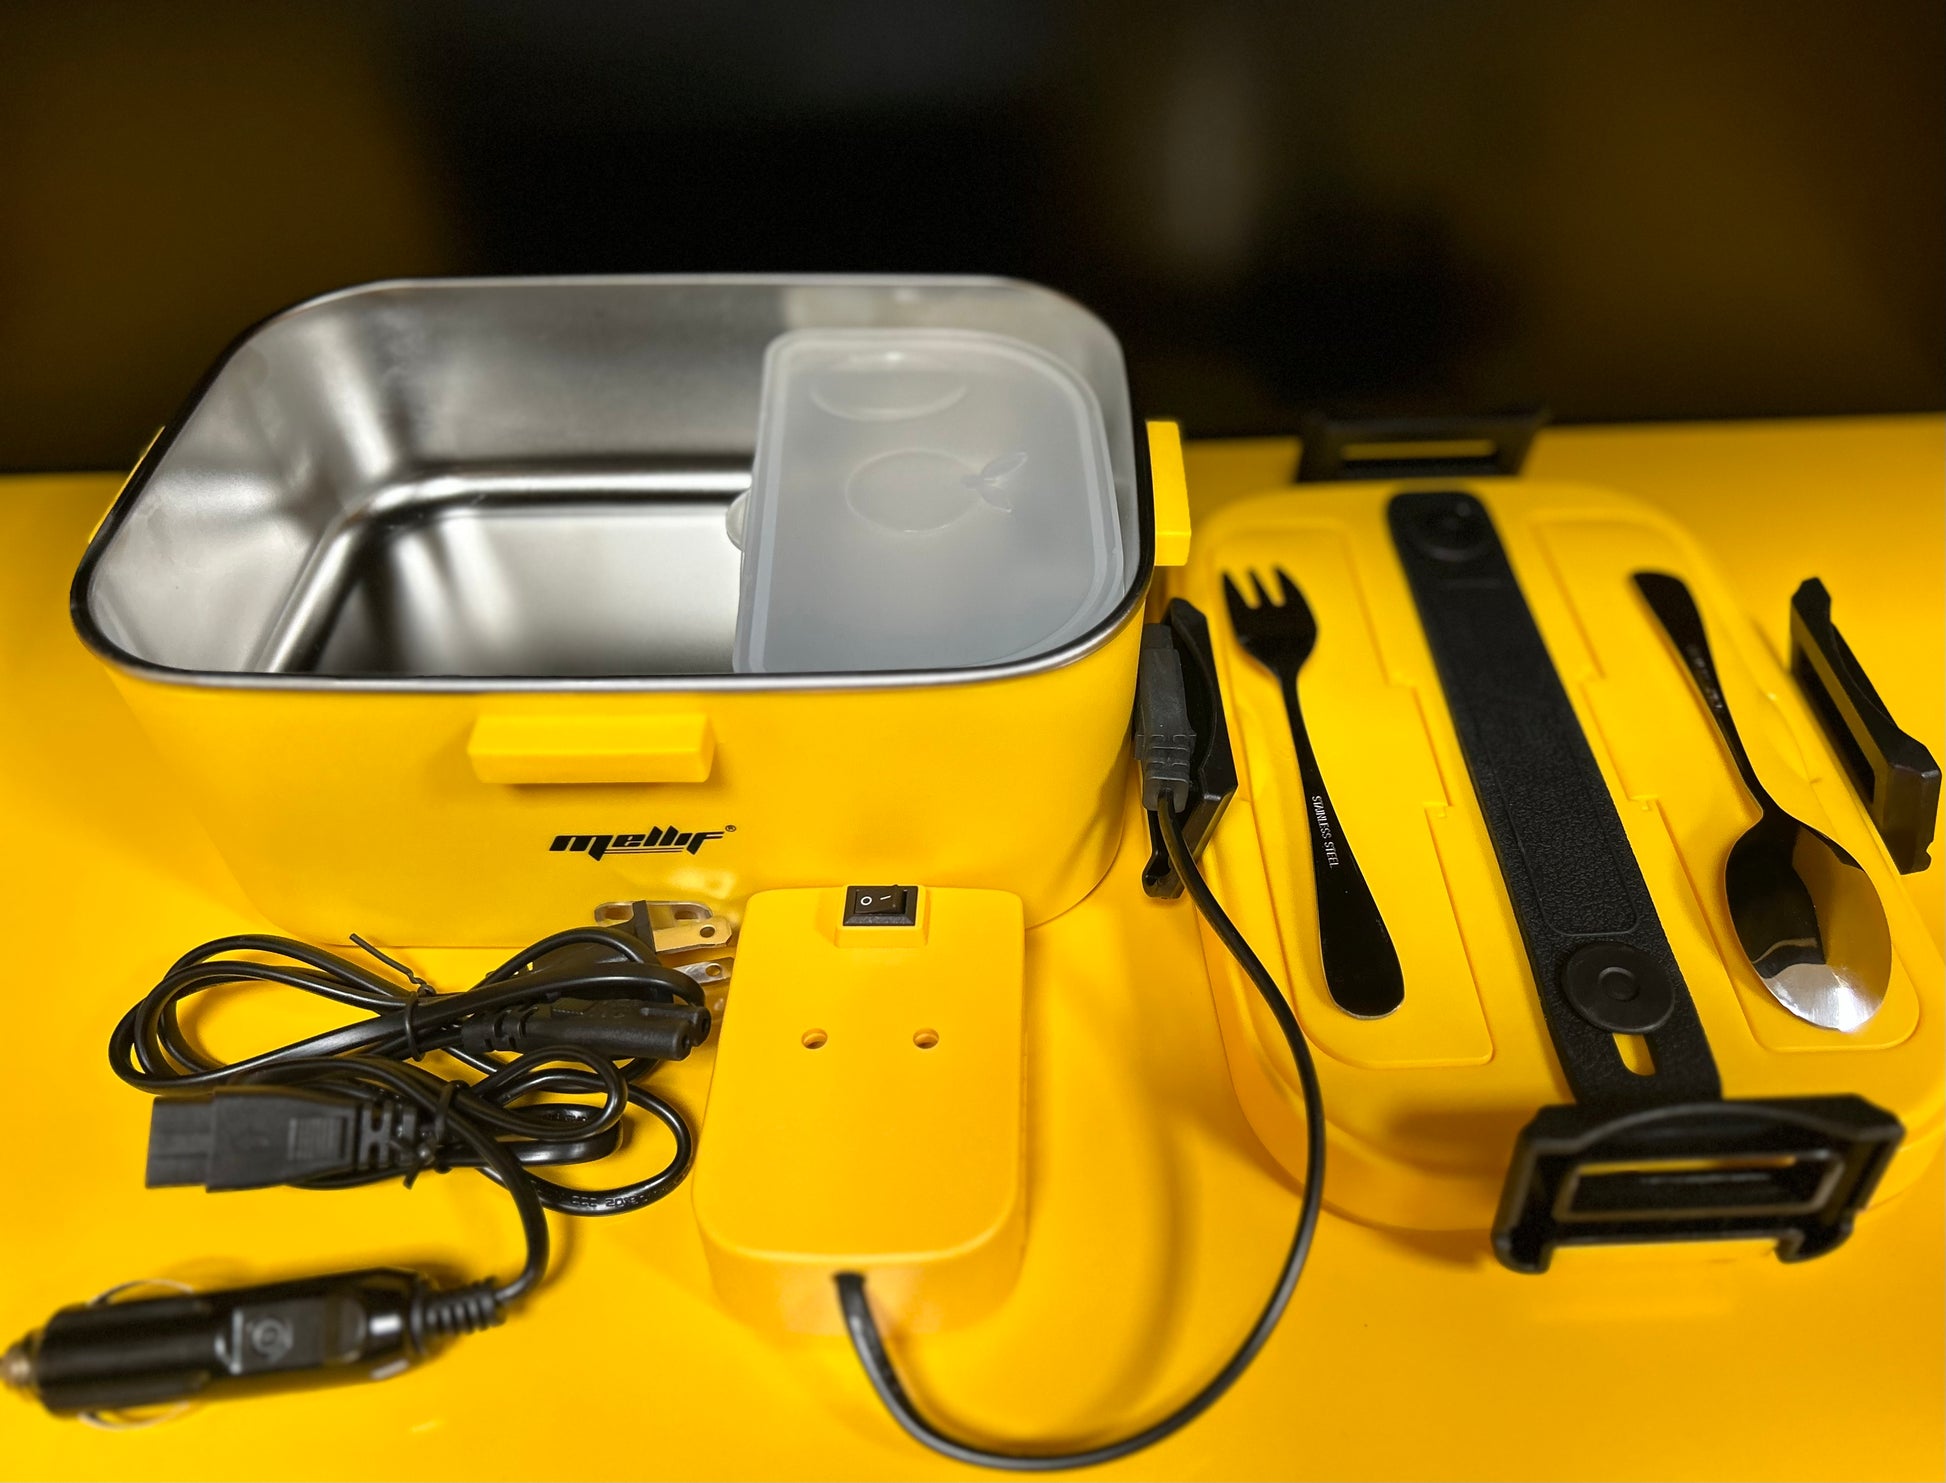 Mellif Electric Lunch Box For dewalt 20V Max Battery(Battery NOT